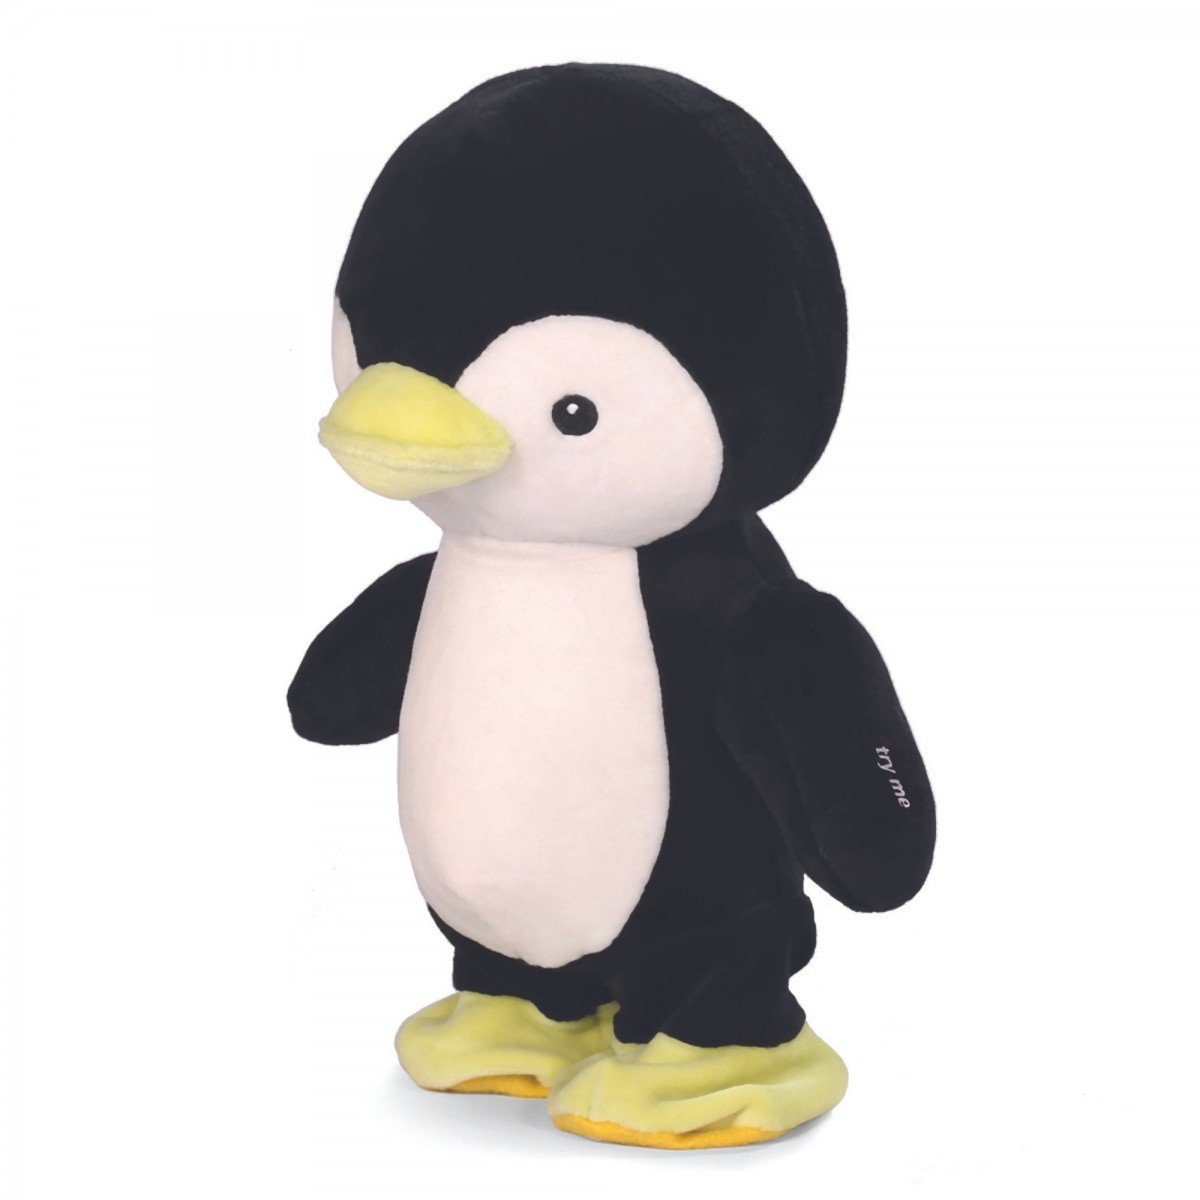 Hamleys Talk-Back Walk N Talk Penguin, Plush Soft Penguin Plush, Multicolour, 3Y+